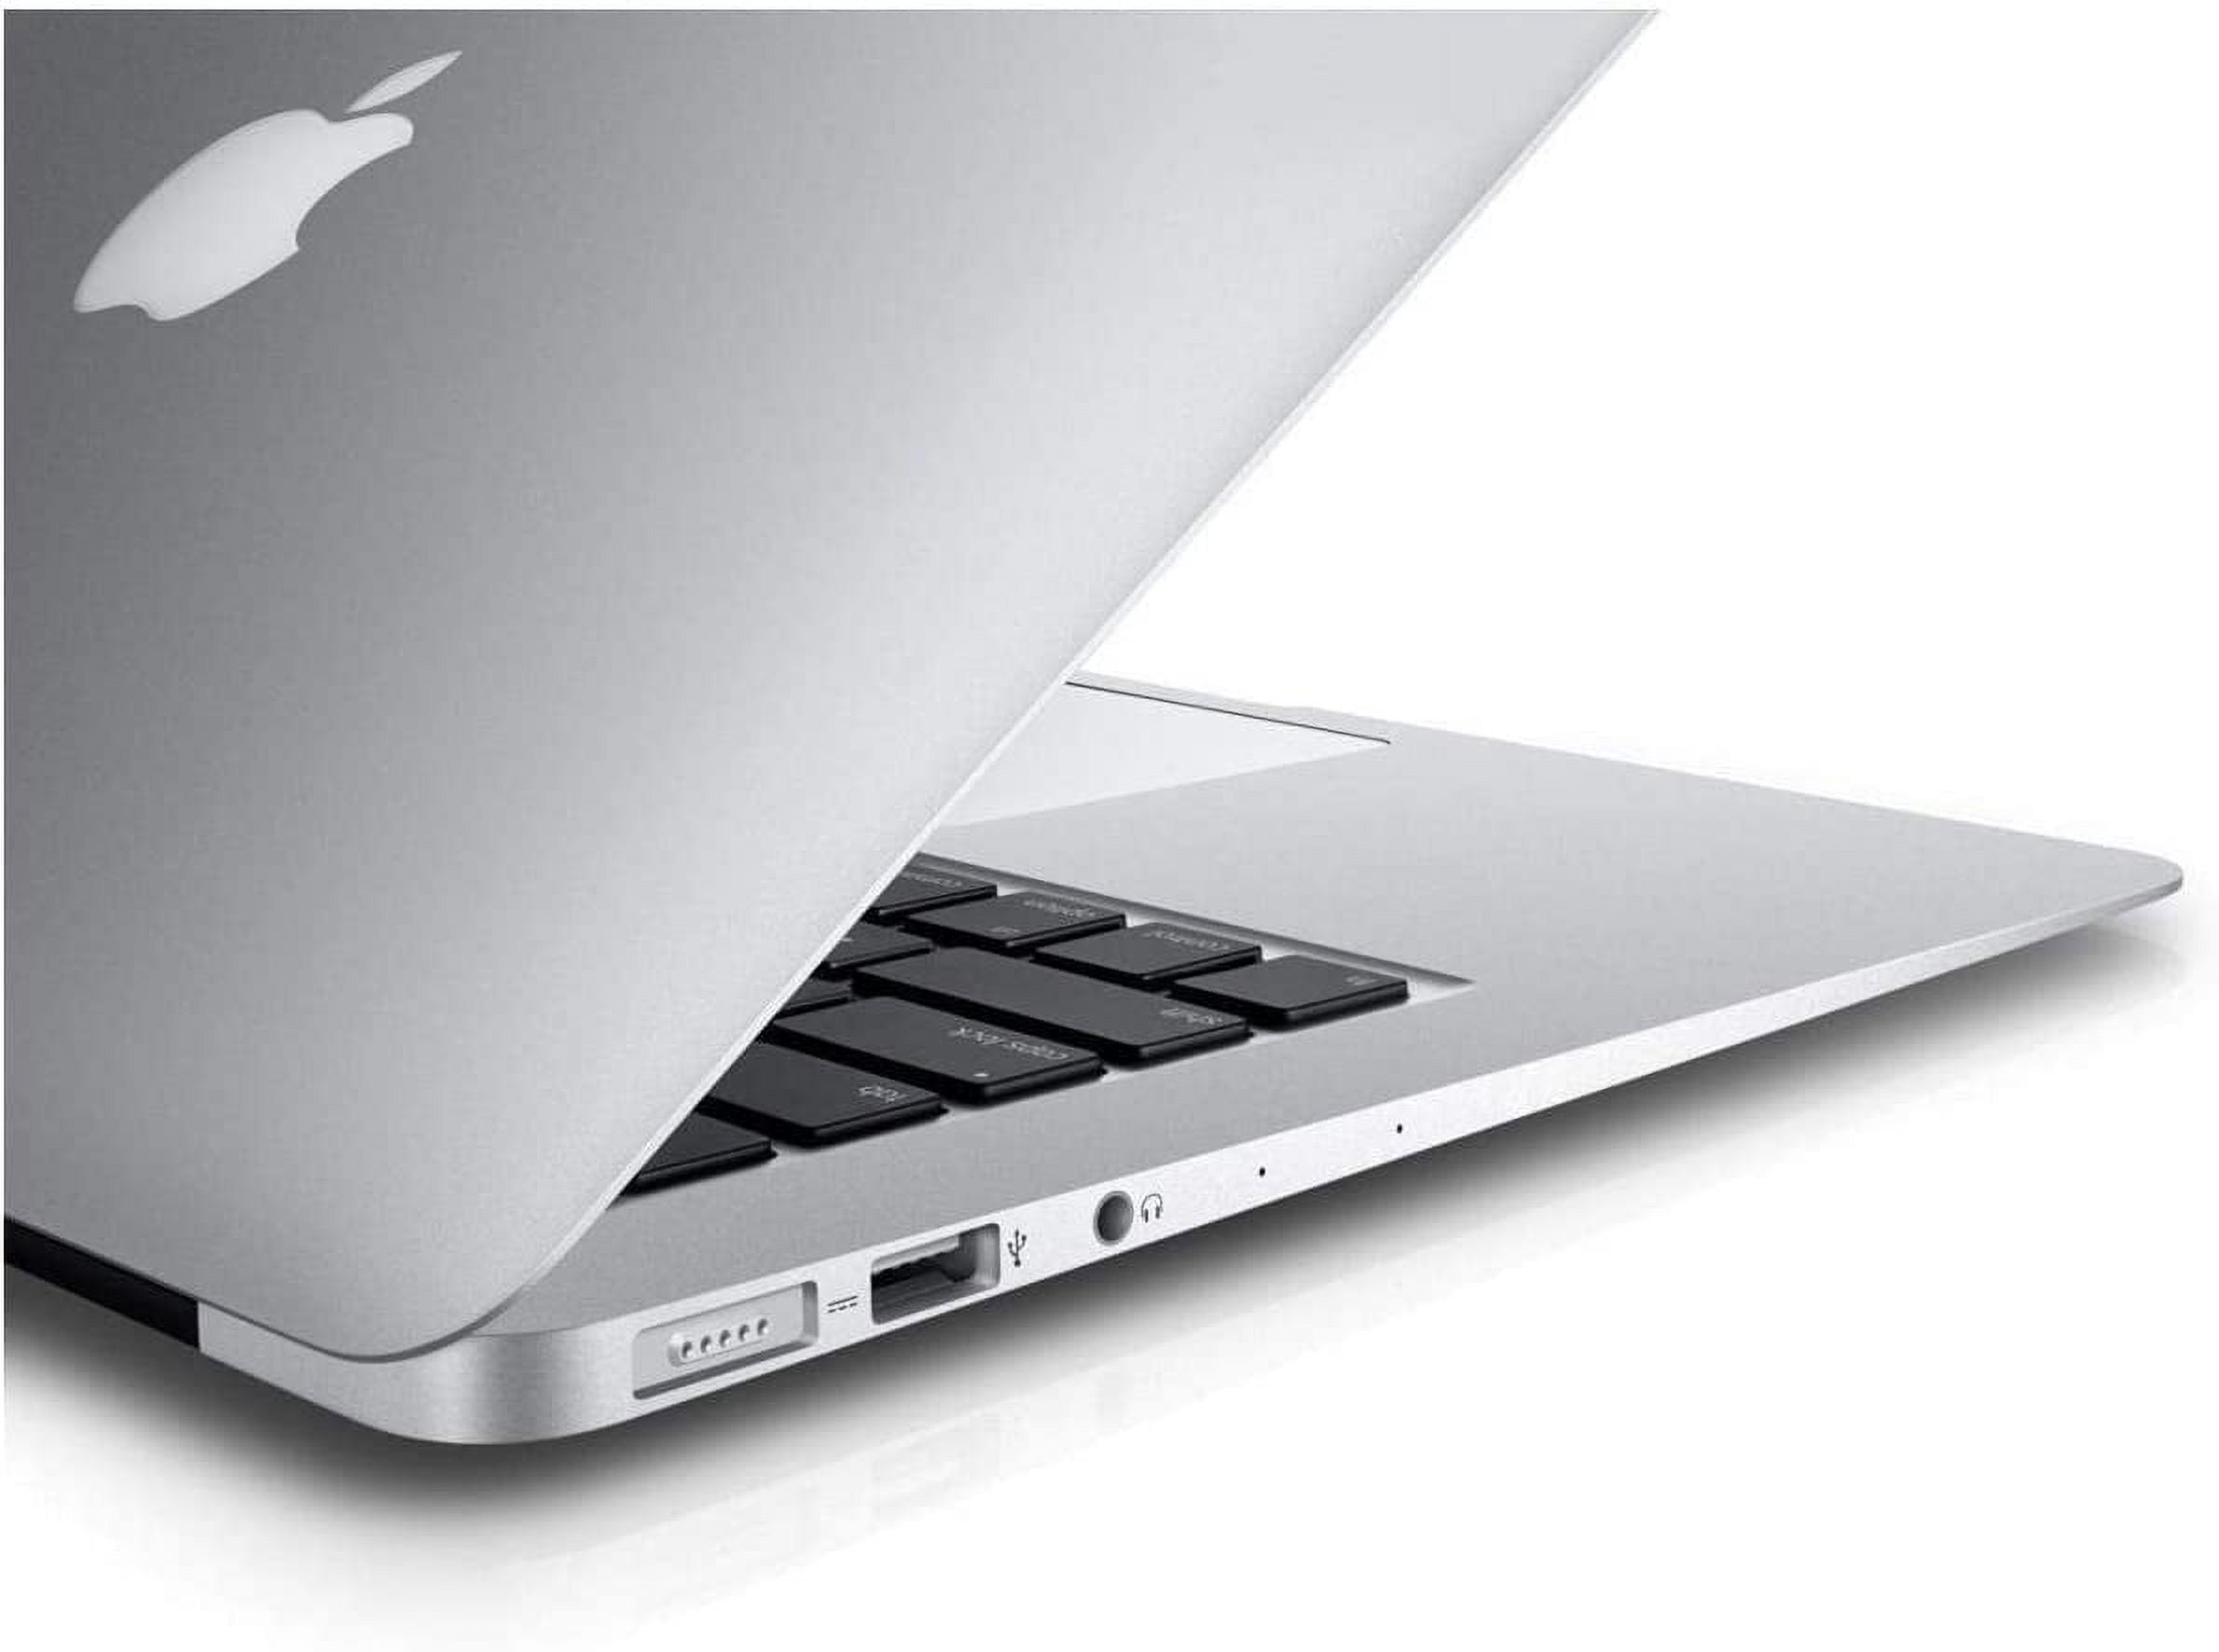 Apple MacBook Air 13.3-inch MQD32LL/A Mid 2017 - Intel Core i5 